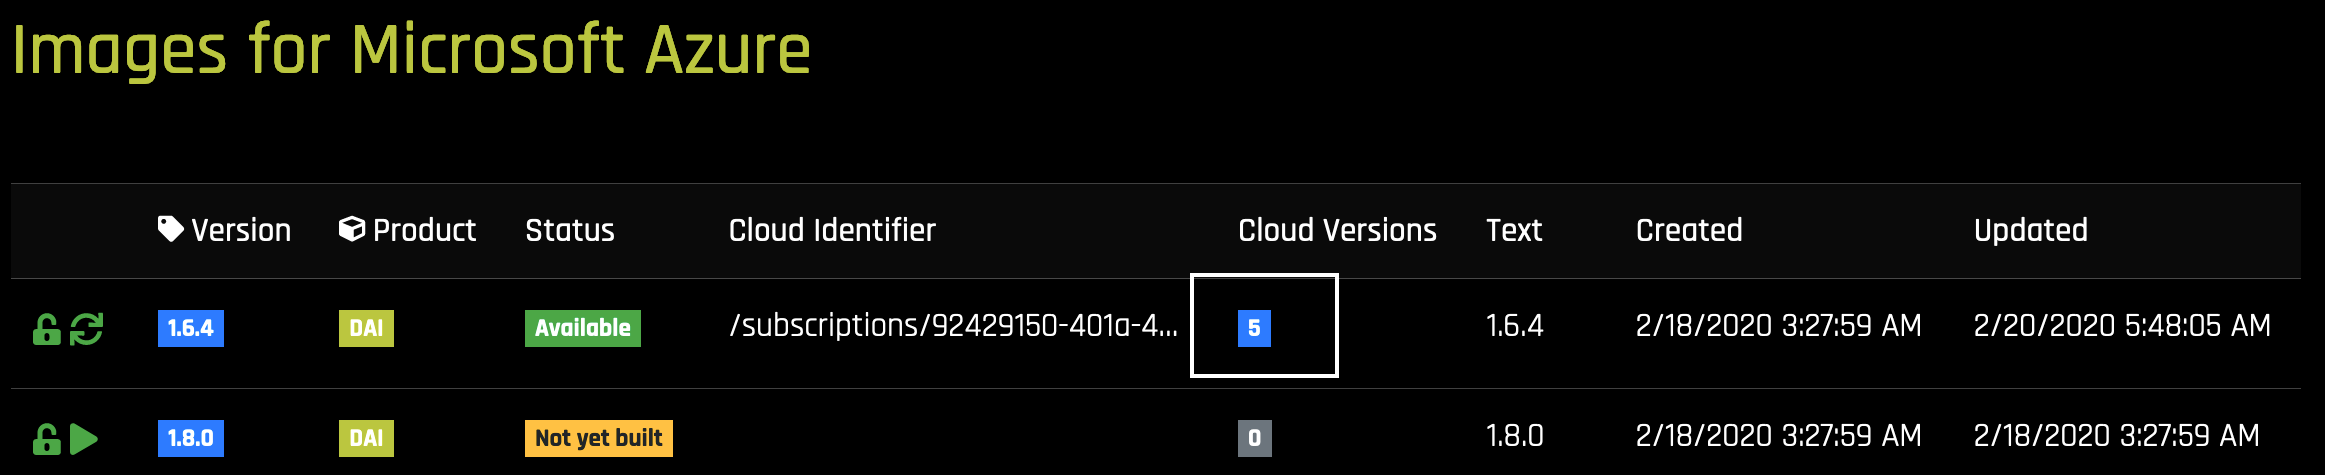 Select cloud versions